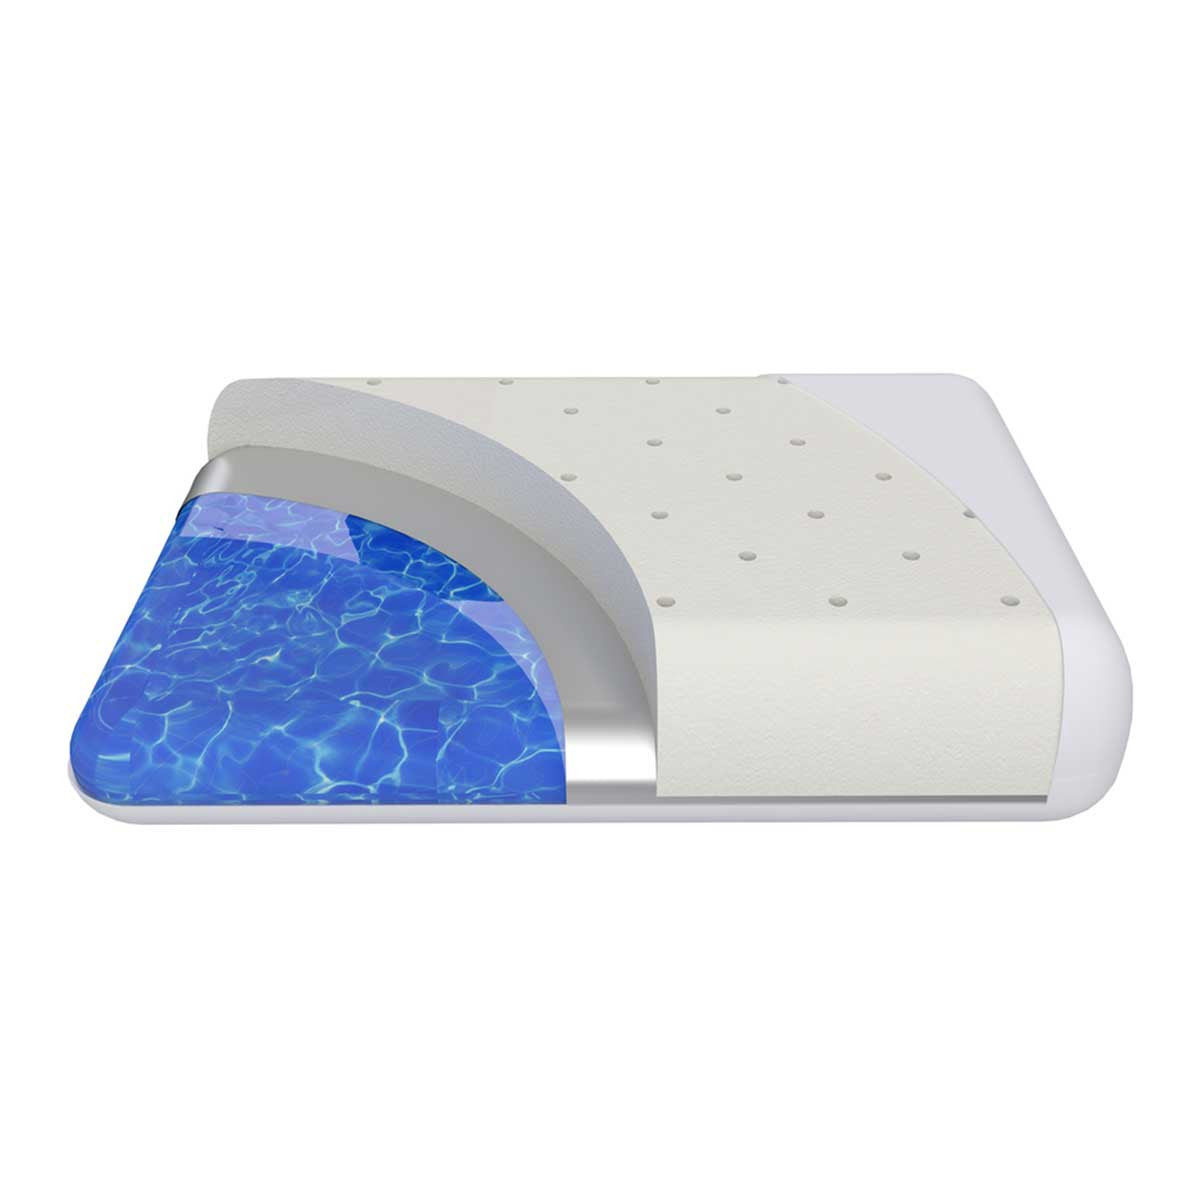 Chiroflow Memory Foam Water Pillow - Case of 4